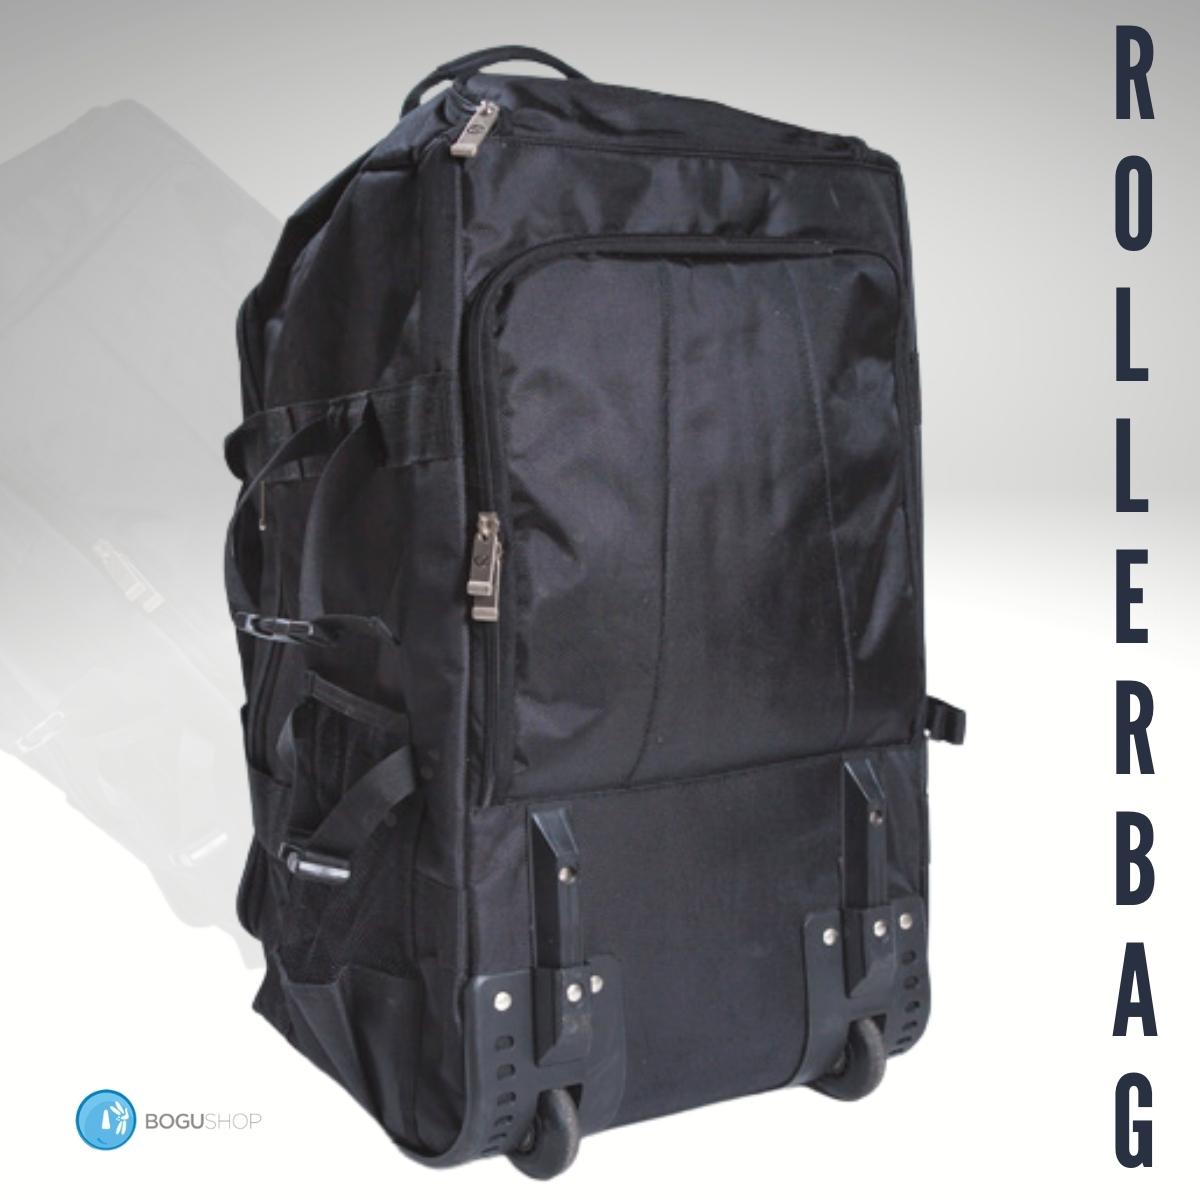 High Quality Roller Bag (3 Uses)